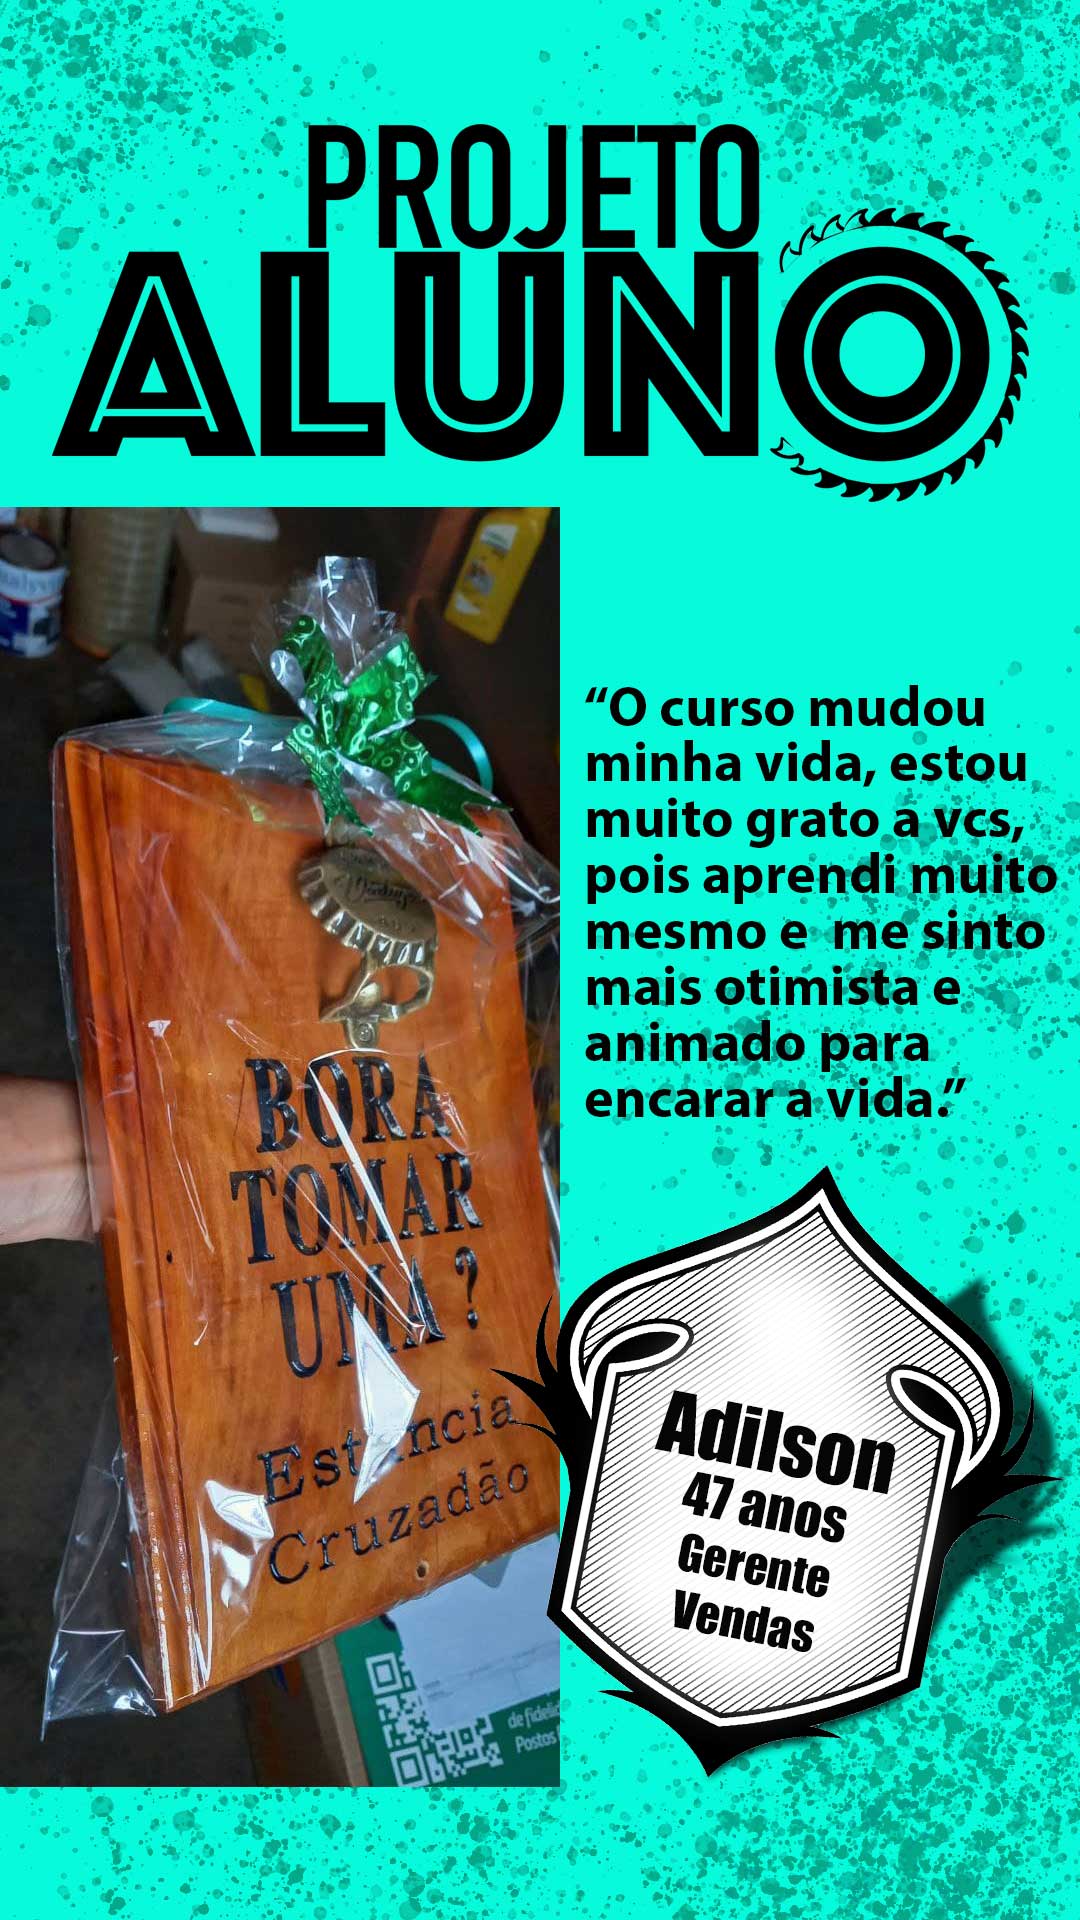 Adilson_Pardo